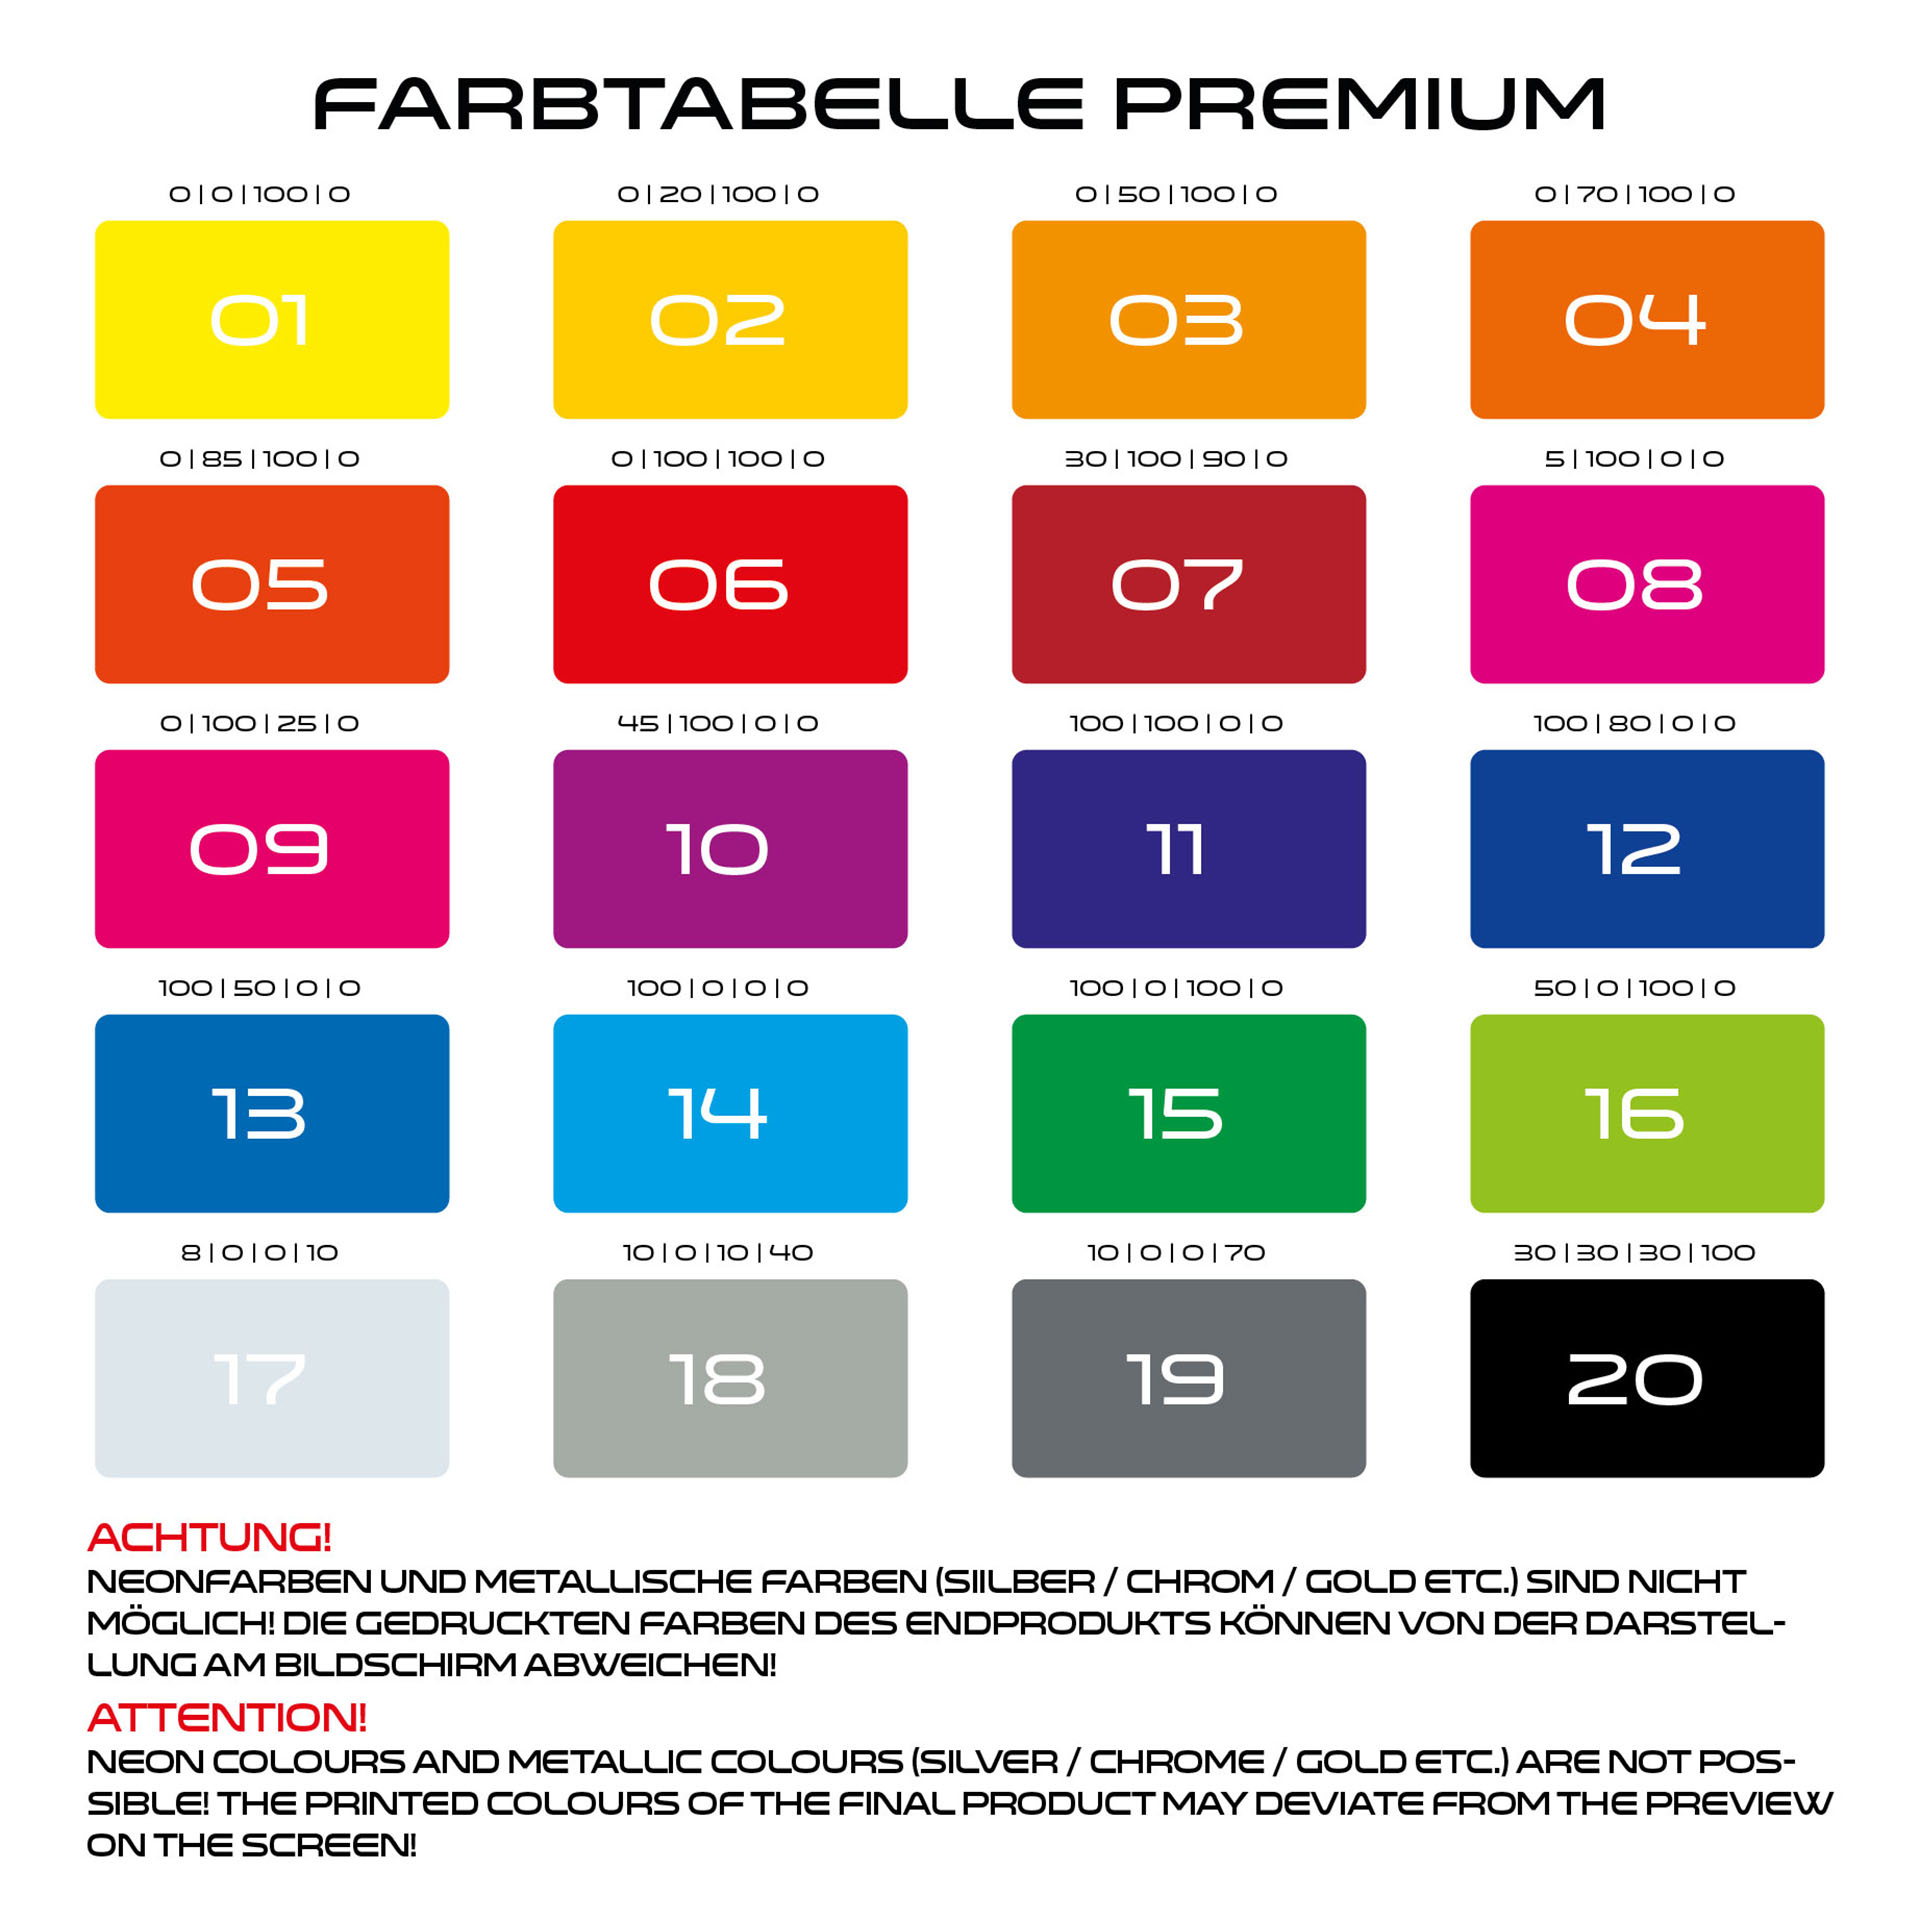 Renngrib V5 Felgenaufkleber Premium Farbtabelle Premium Wheelsticker